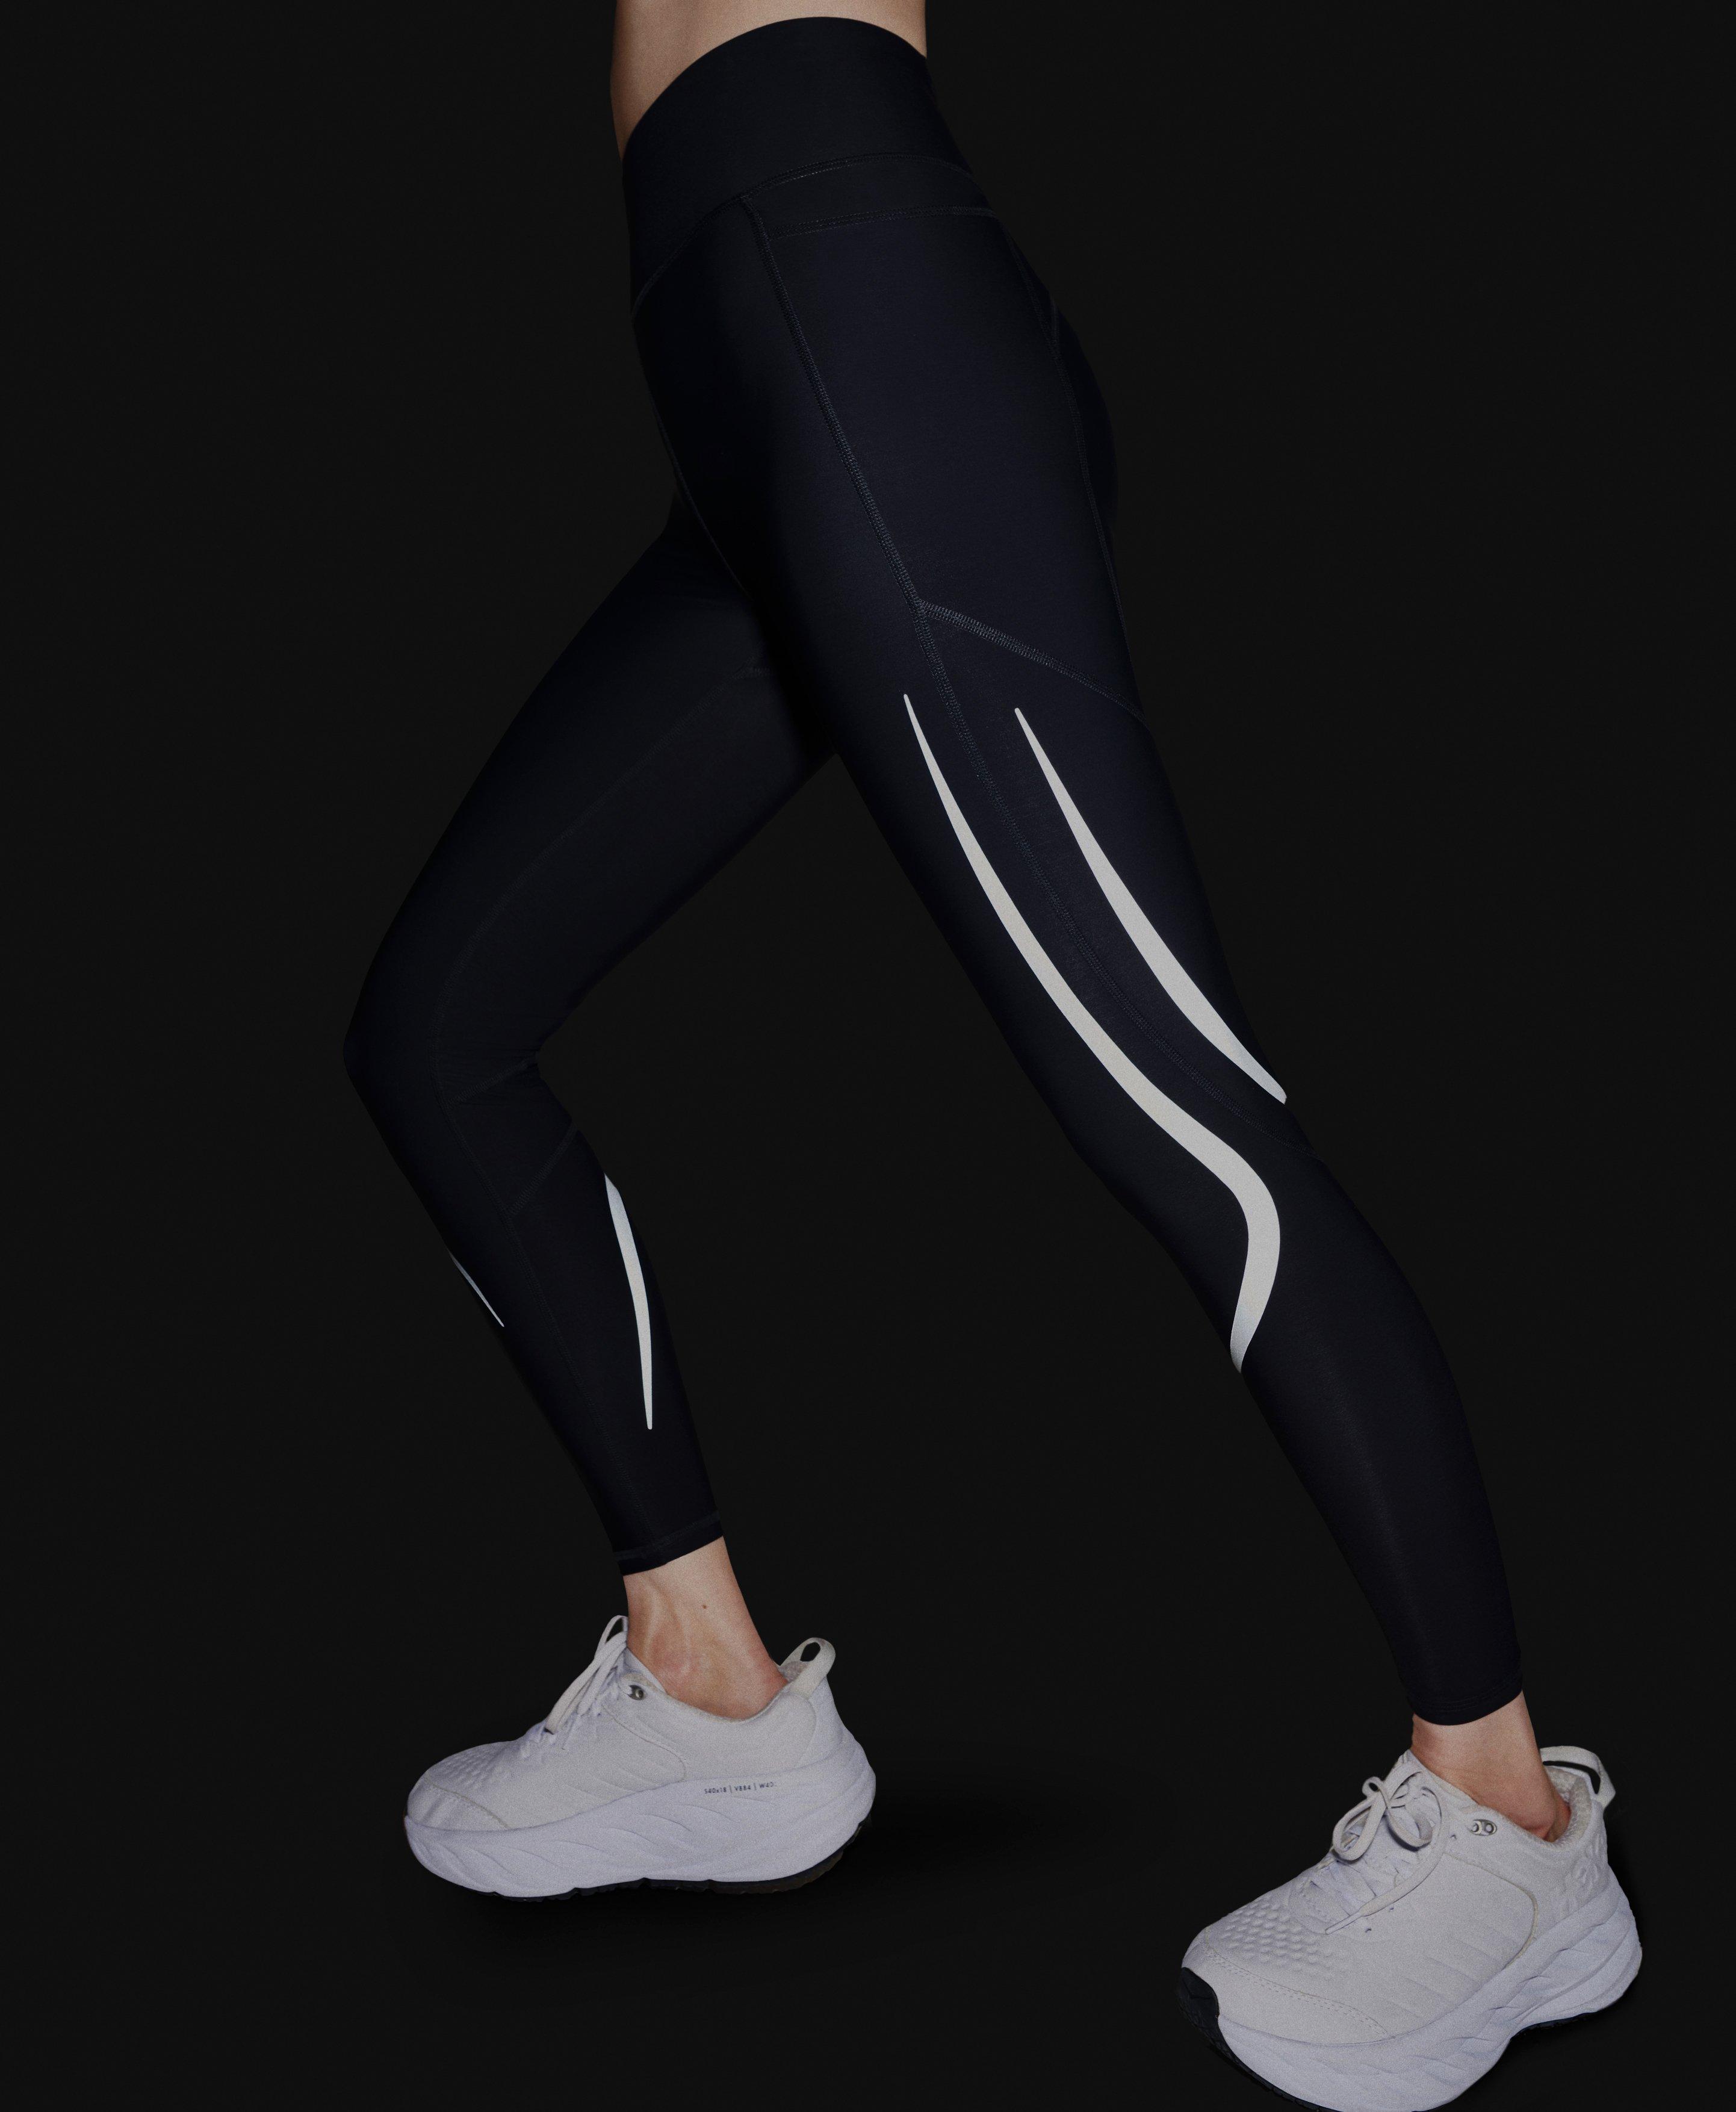 Pockets For Women - Zero Gravity 7/8 Illuminate Running Leggings